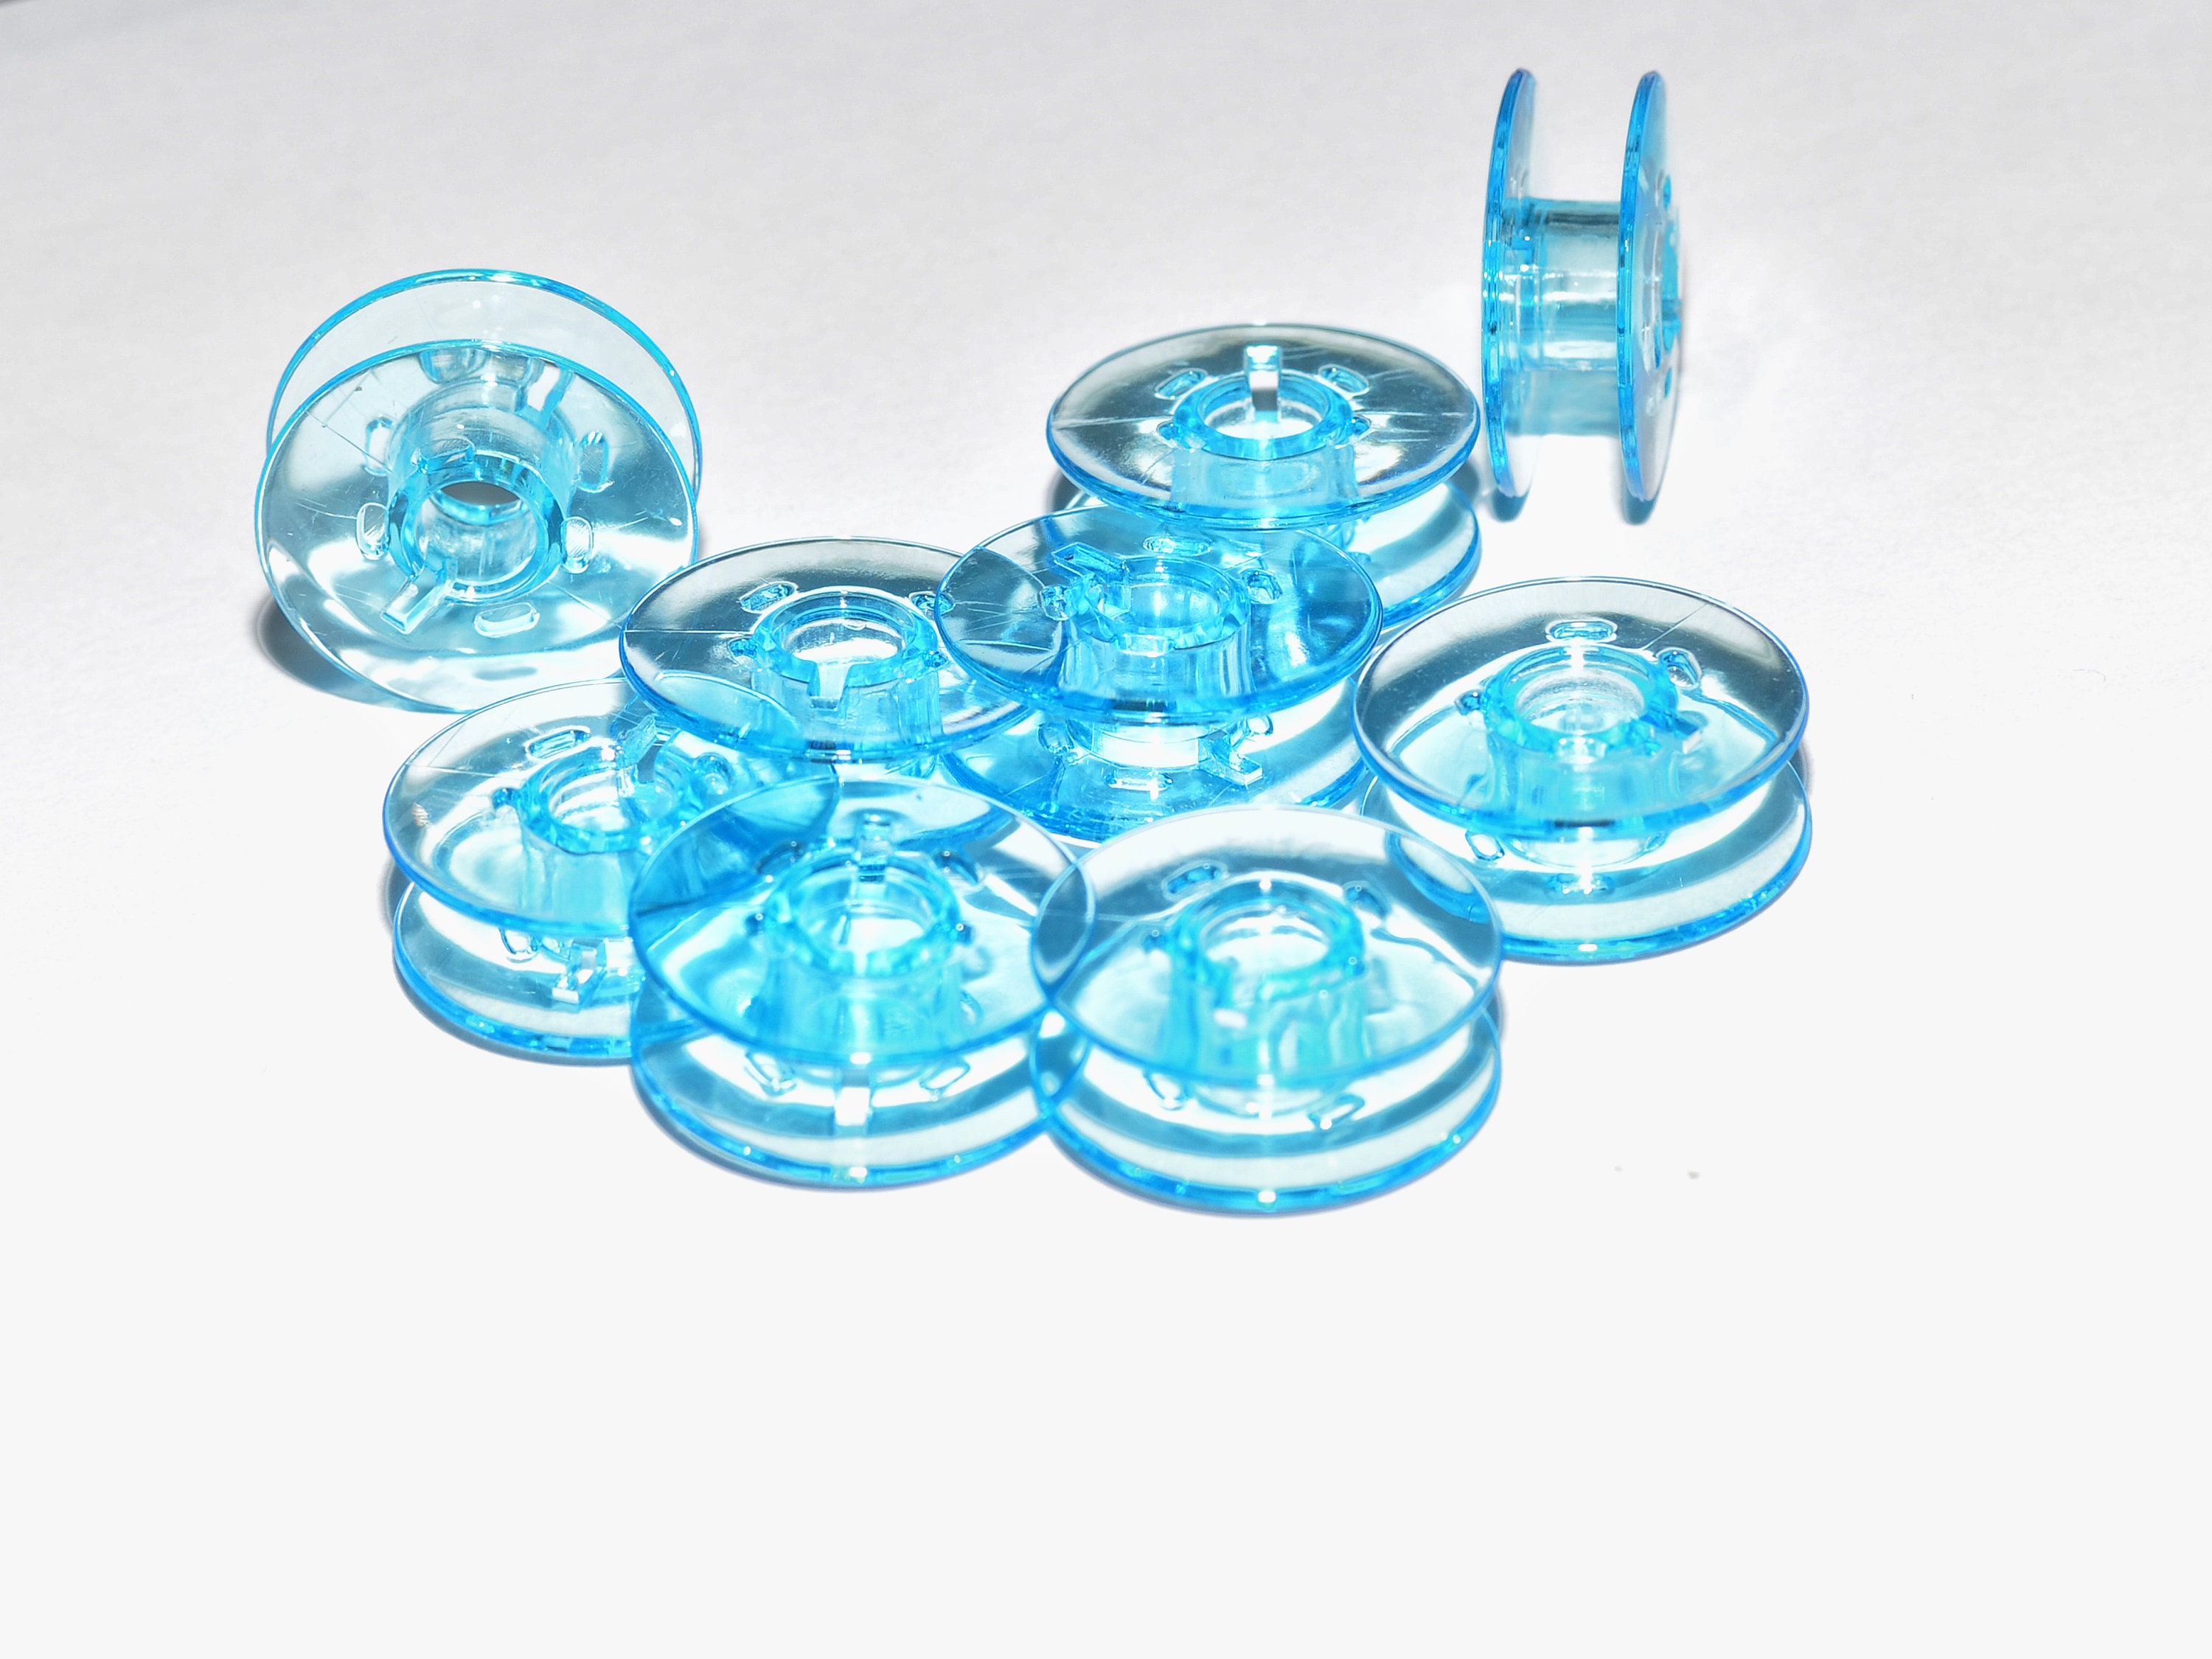 Pfaff BOBBINS 9304097045 Blue Plastic for Sewing Machines 10 Pieces 